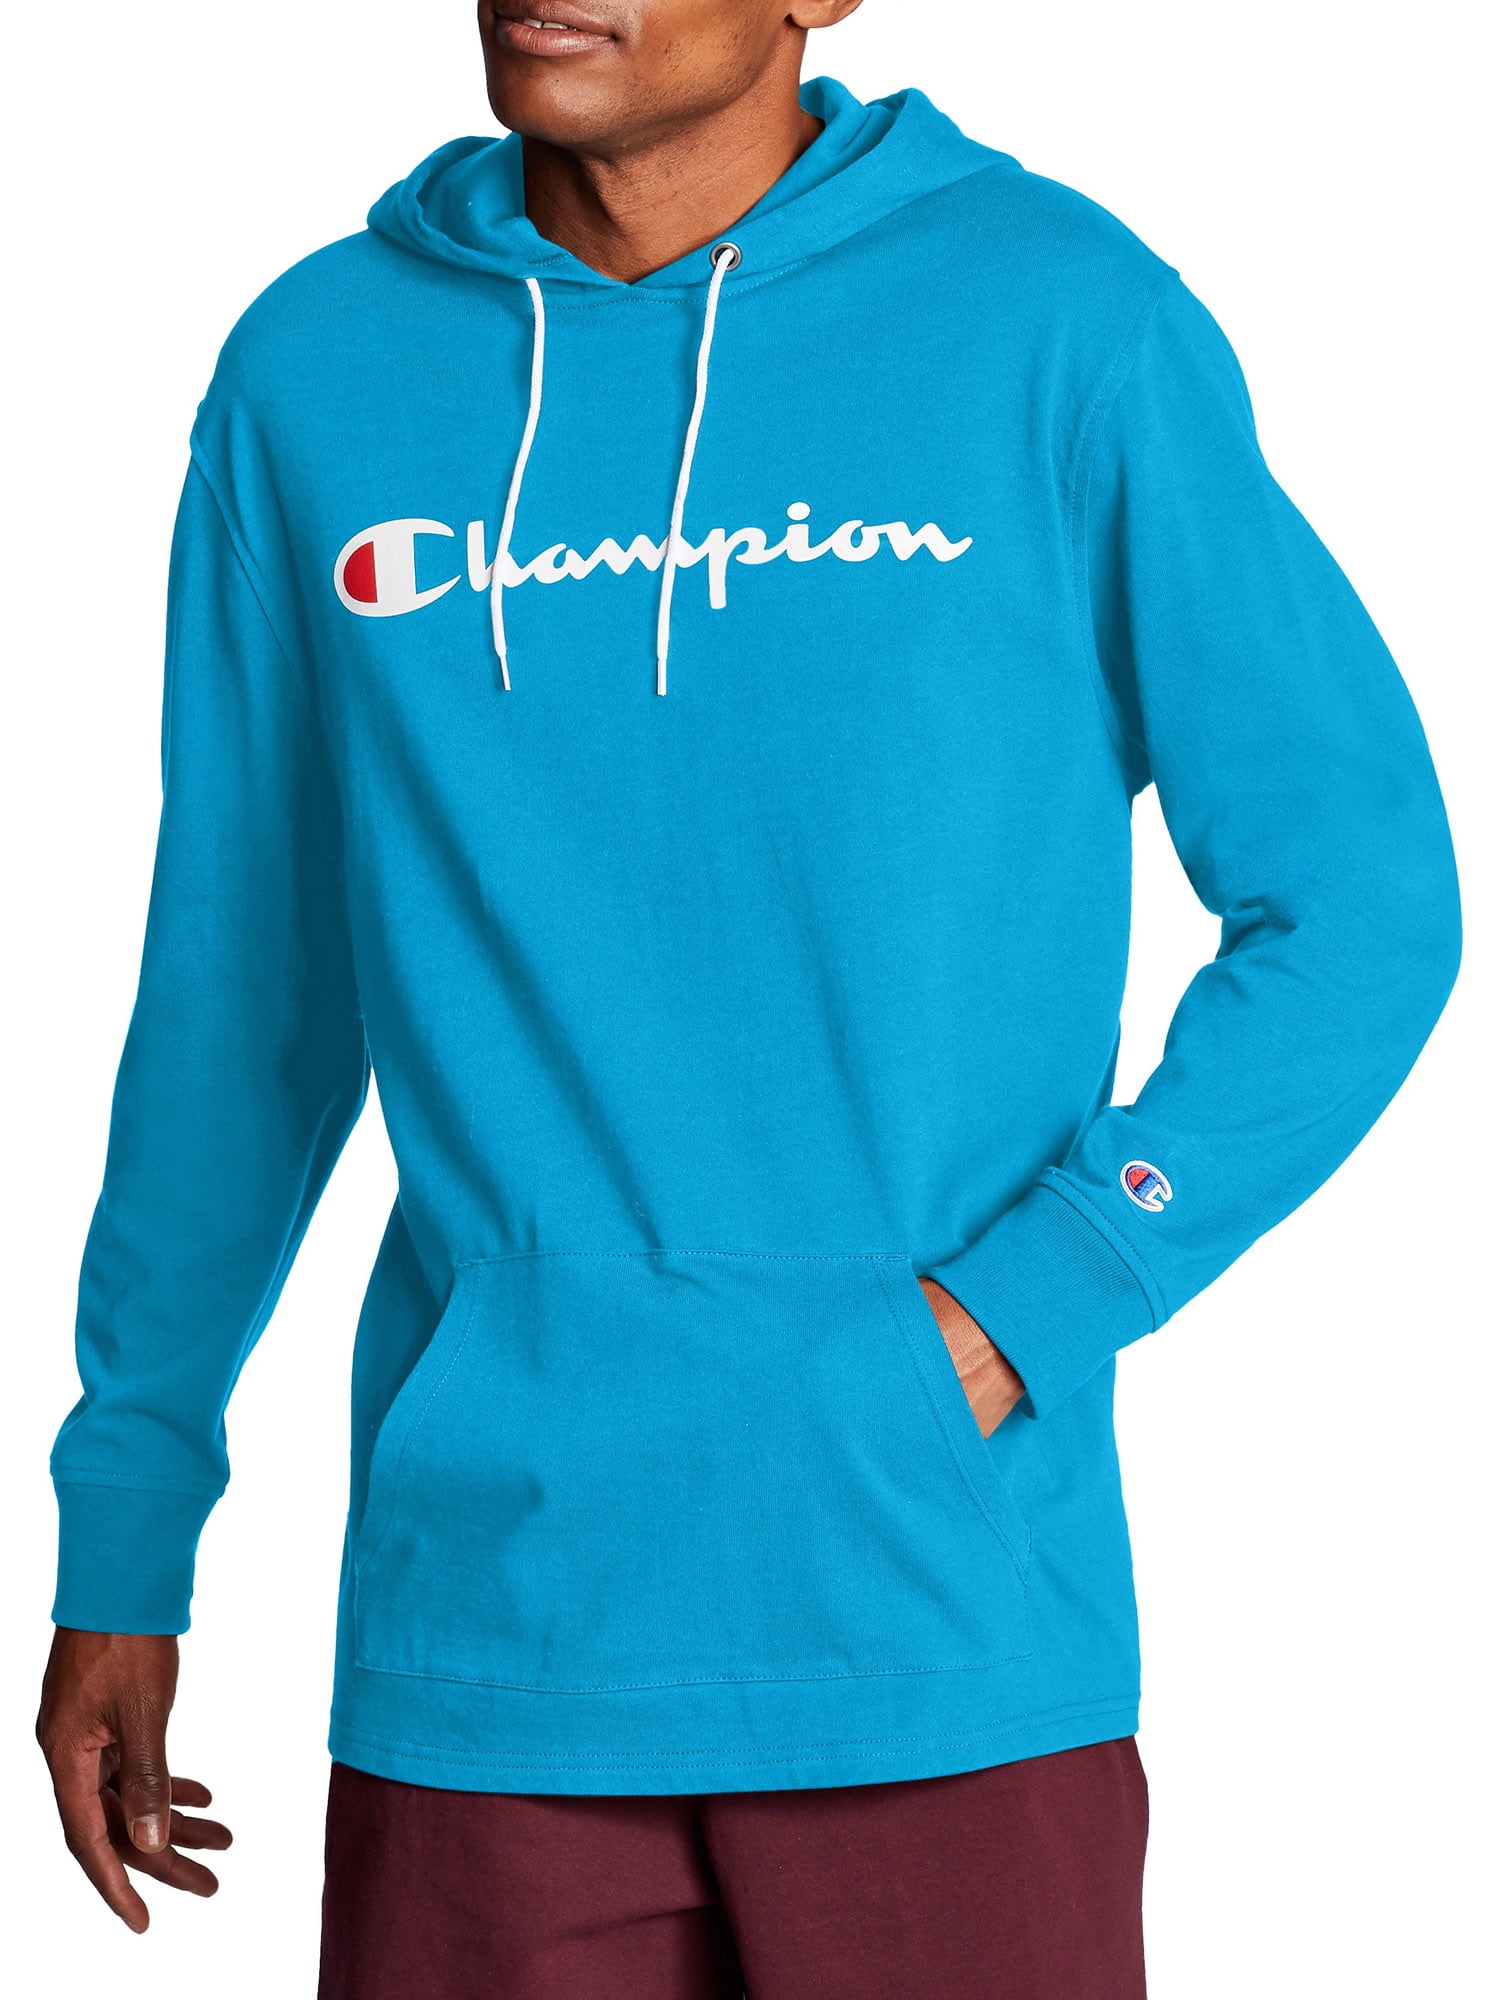 champion champion hoodie